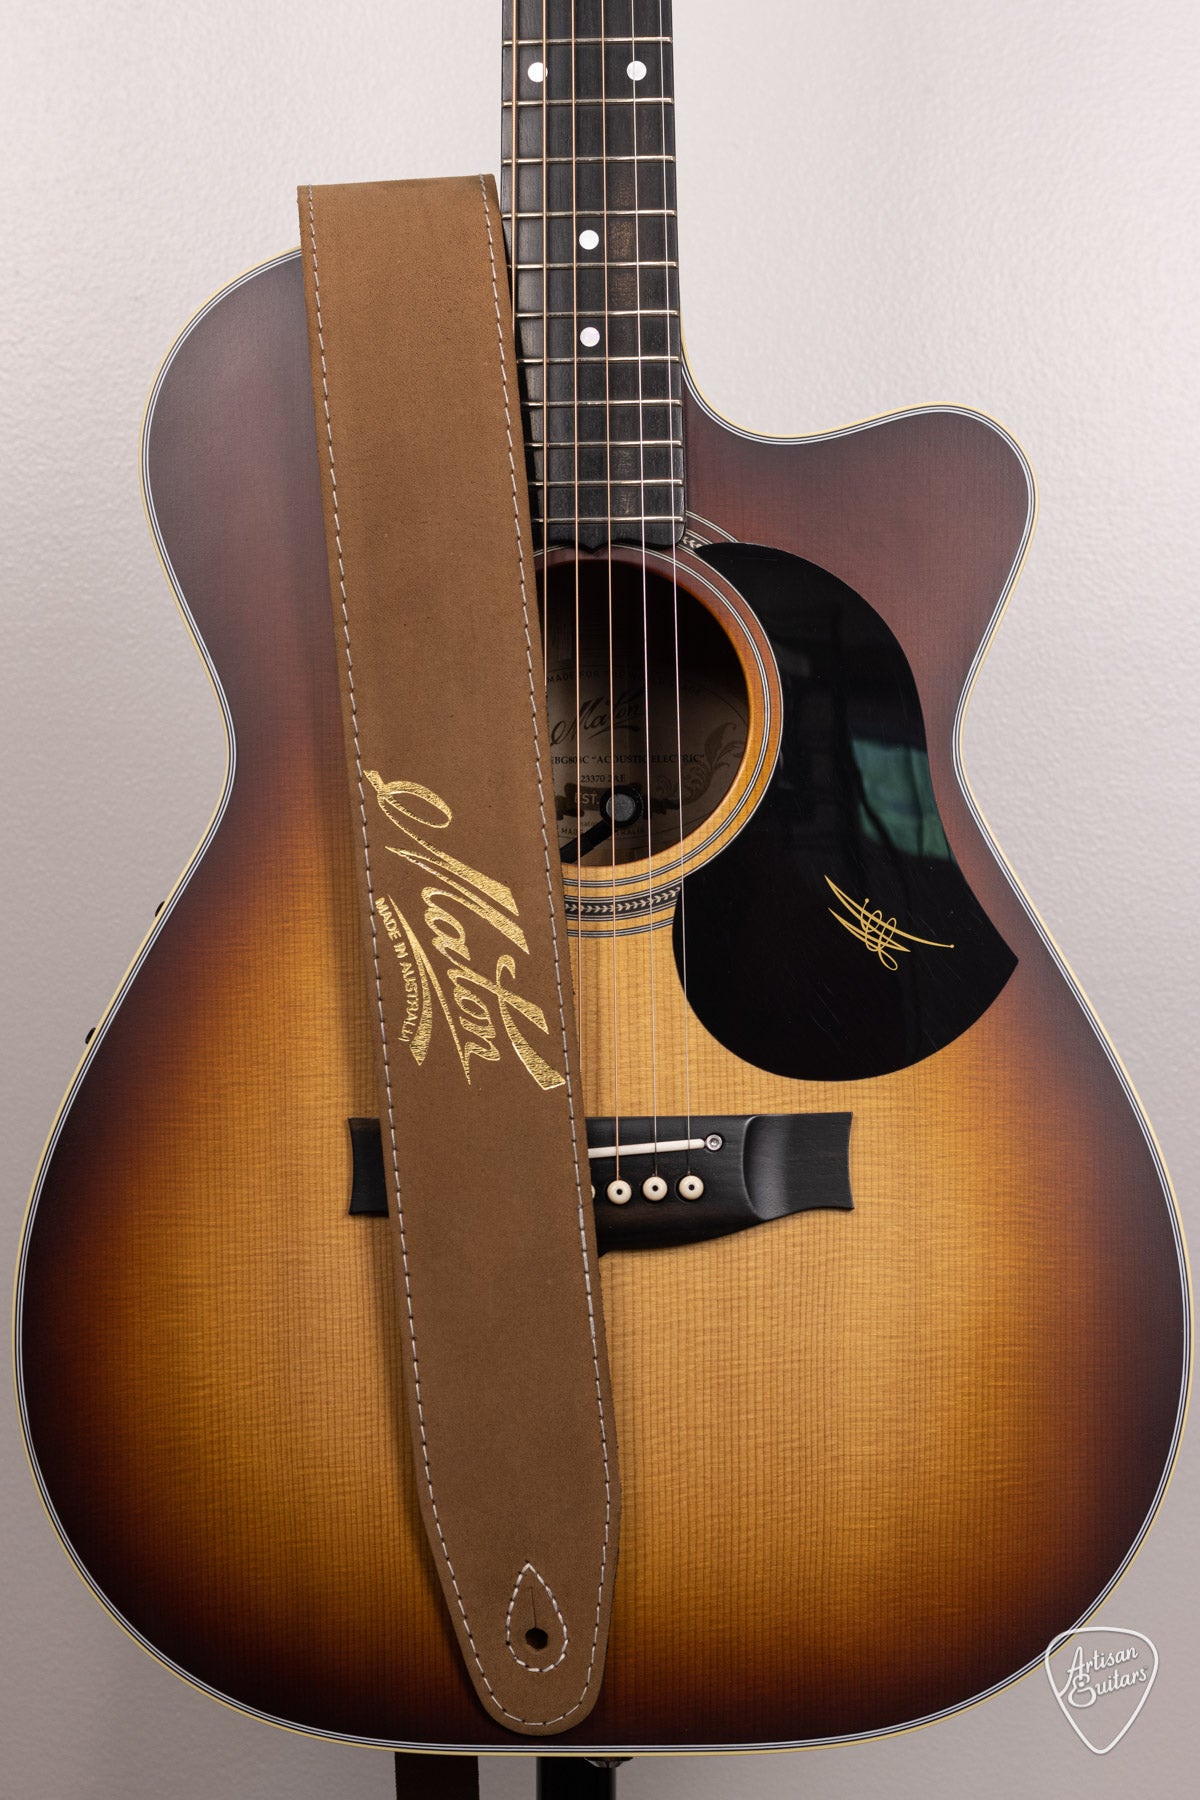 Maton Guitars Standard Leather Guitar Strap - Brown - 15202